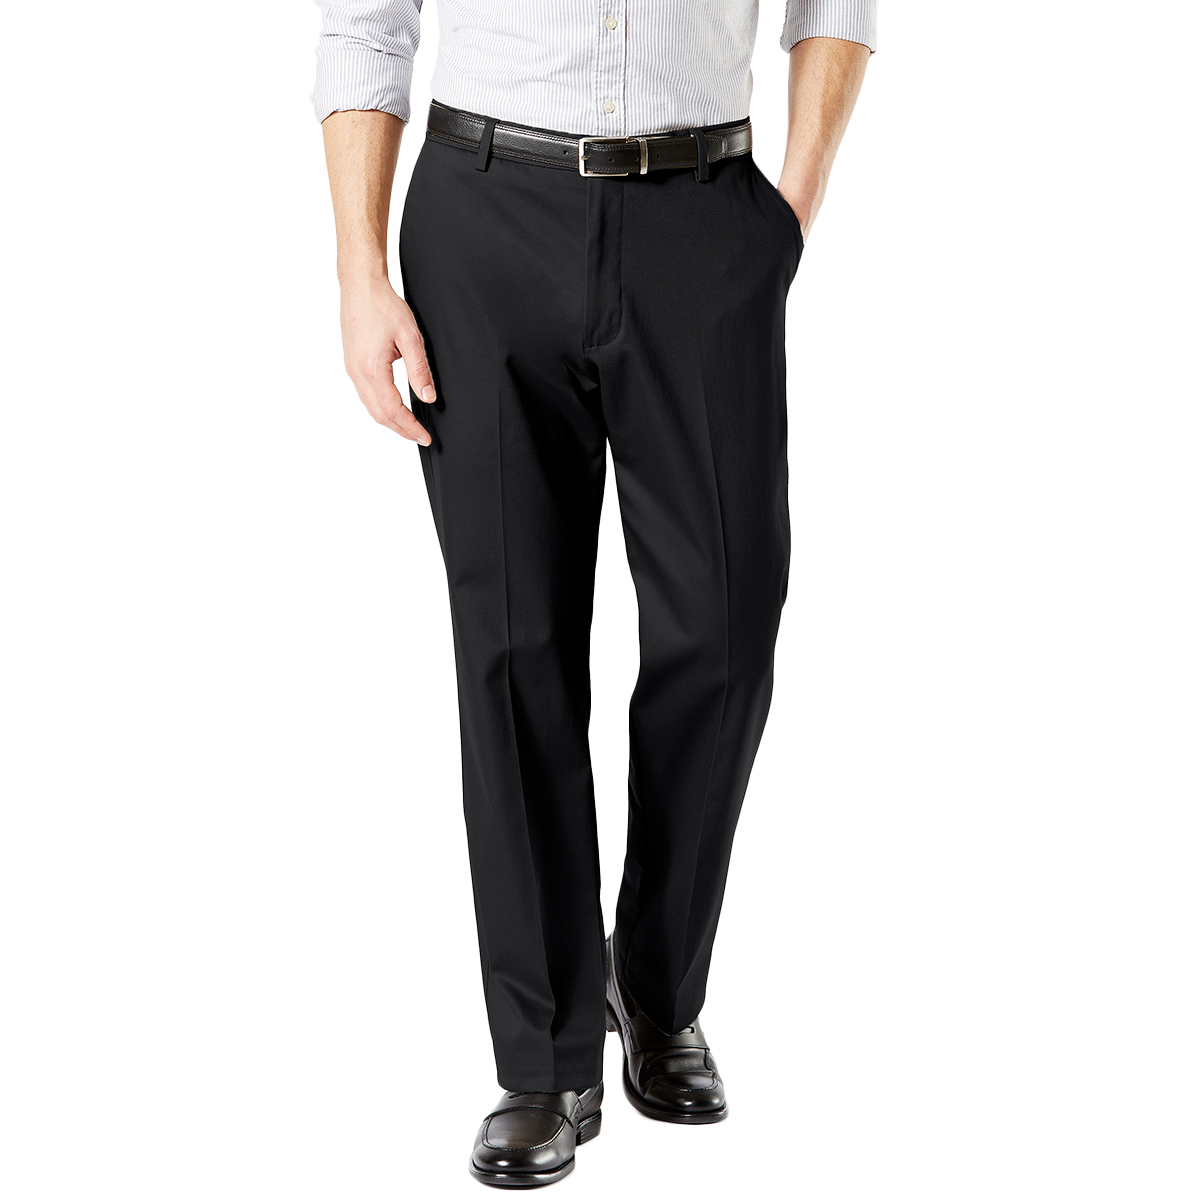 Dockers Men's Classic Fit Signature Khaki 2.0 Flat-Front Stretch Crease Pants - Black, 42/30